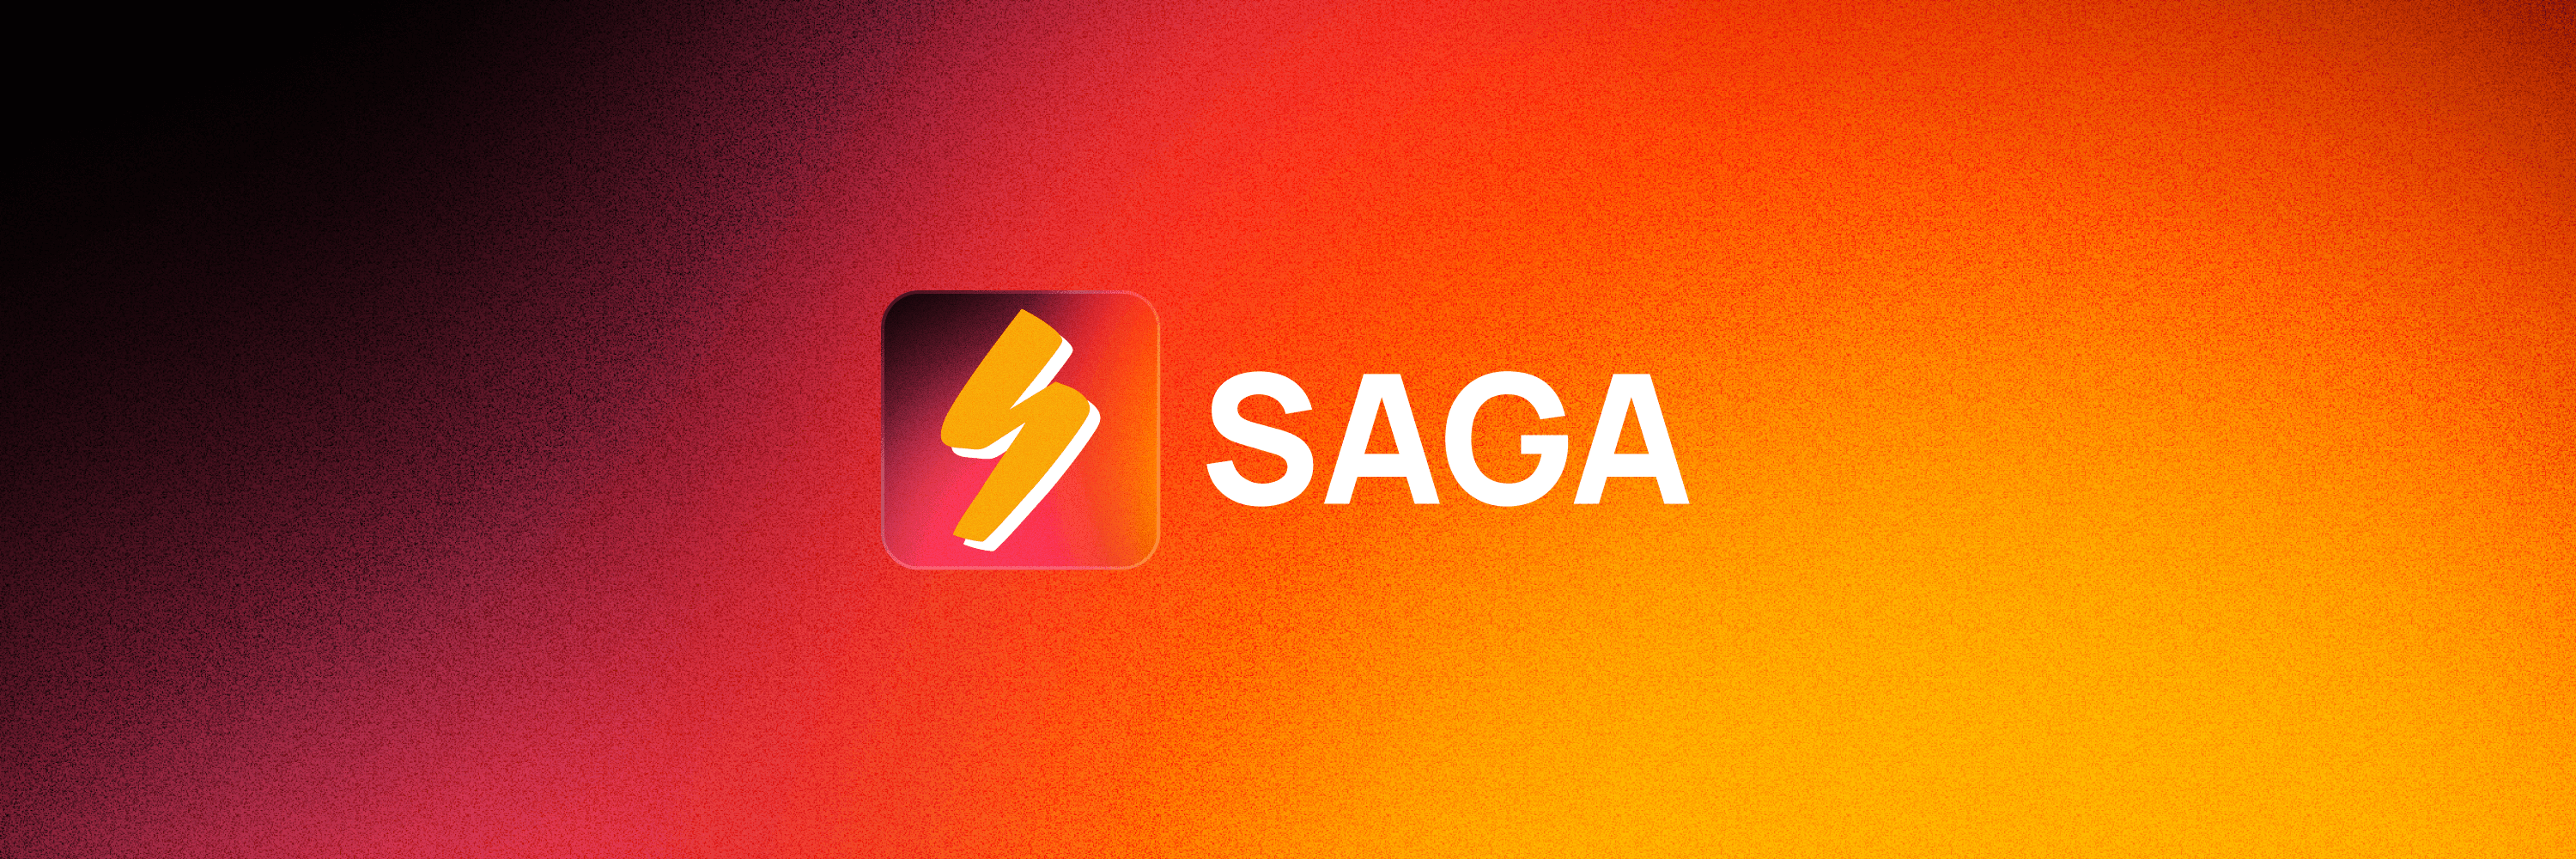 SAGA-Crear y reproducir aventuras basadas en texto con personajes mejorados con AI